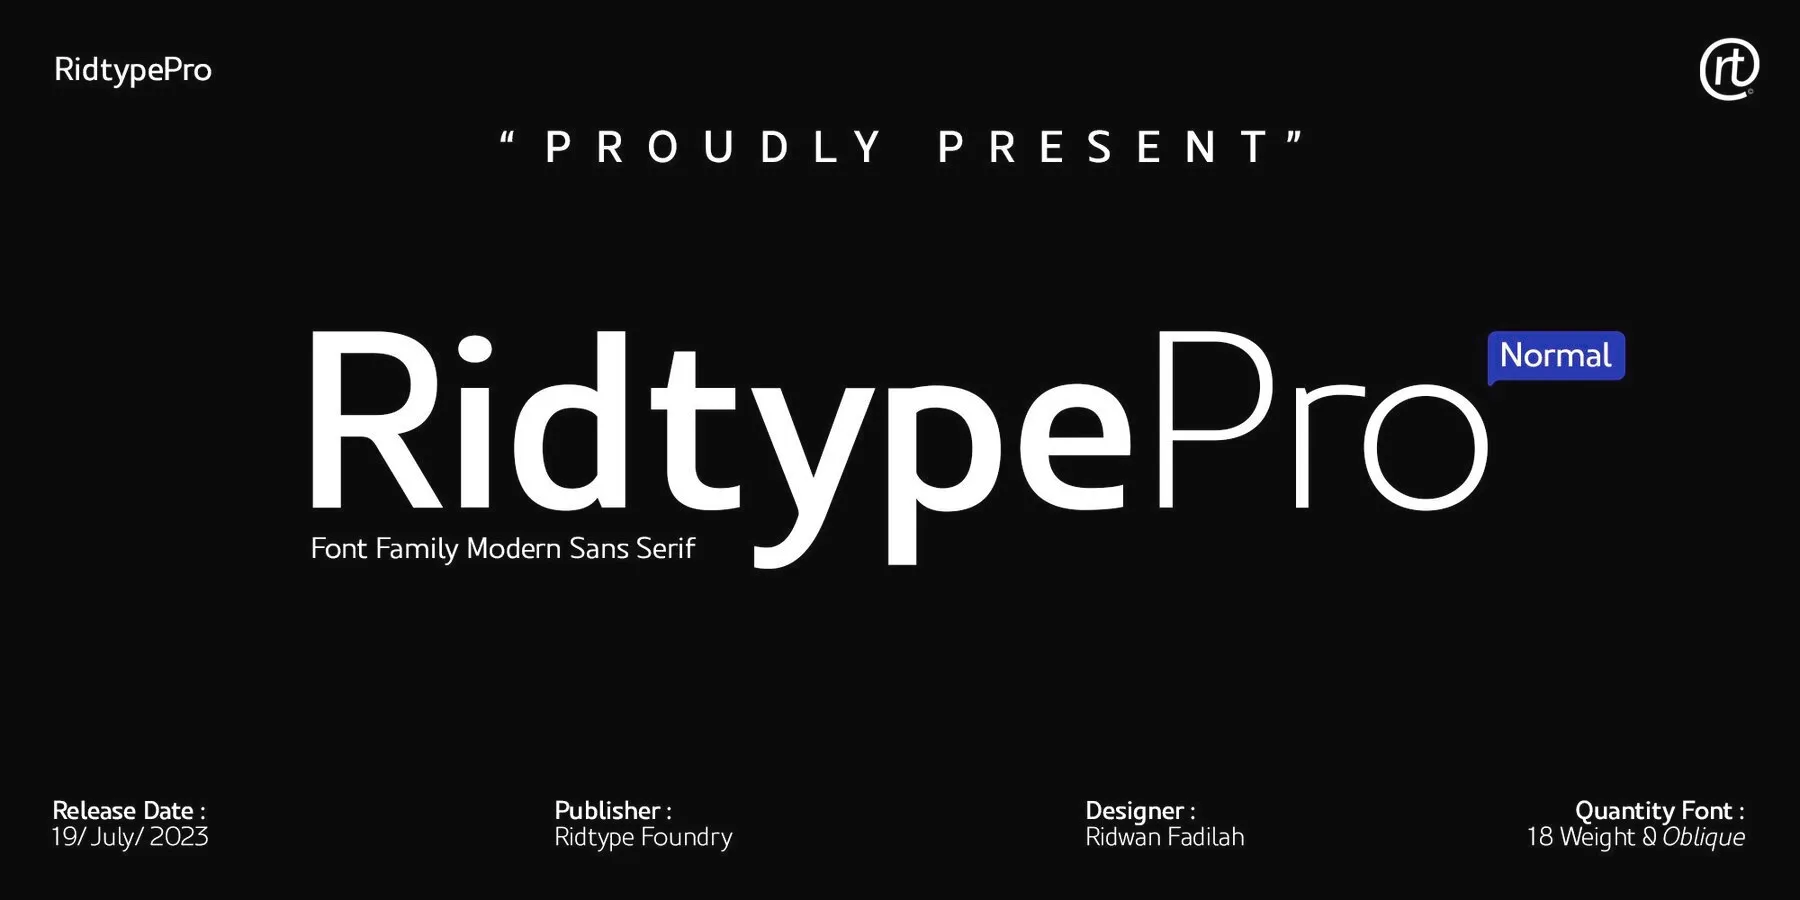 Ridtype Pro